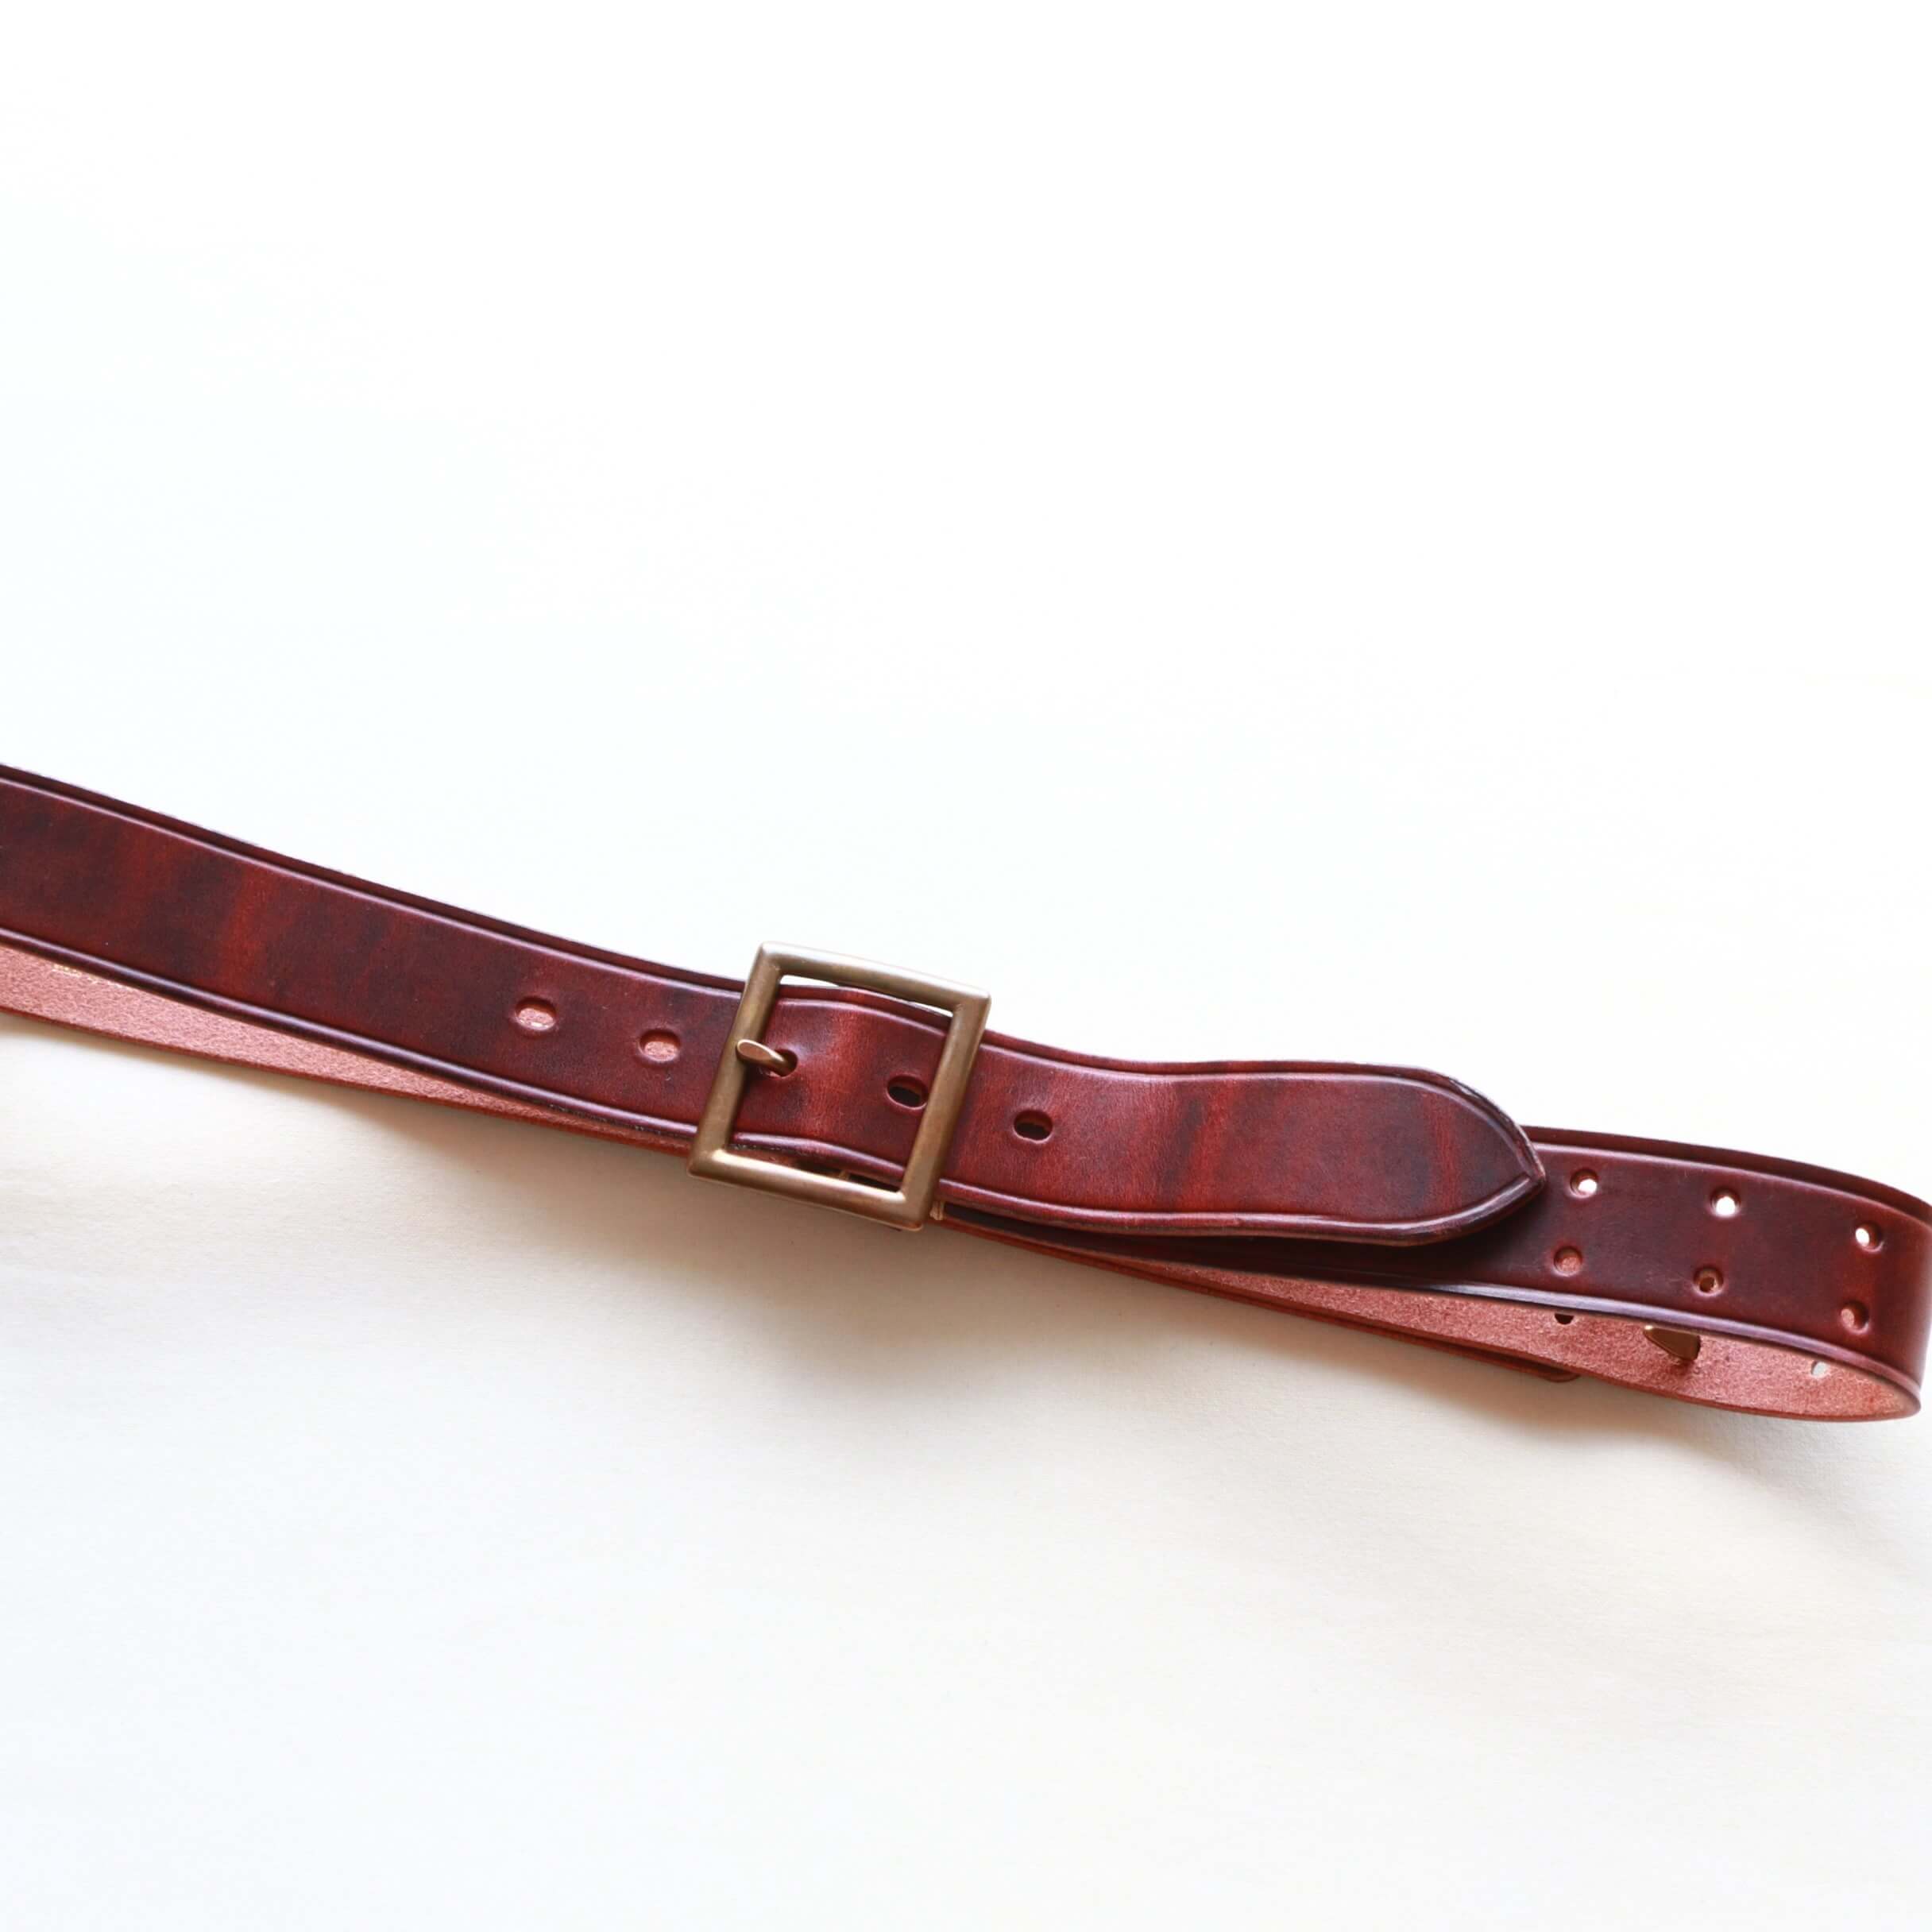 Vintage Works ヴィンテージワークス Leather belt 5Hole レザーベルト 5ホール DH5698